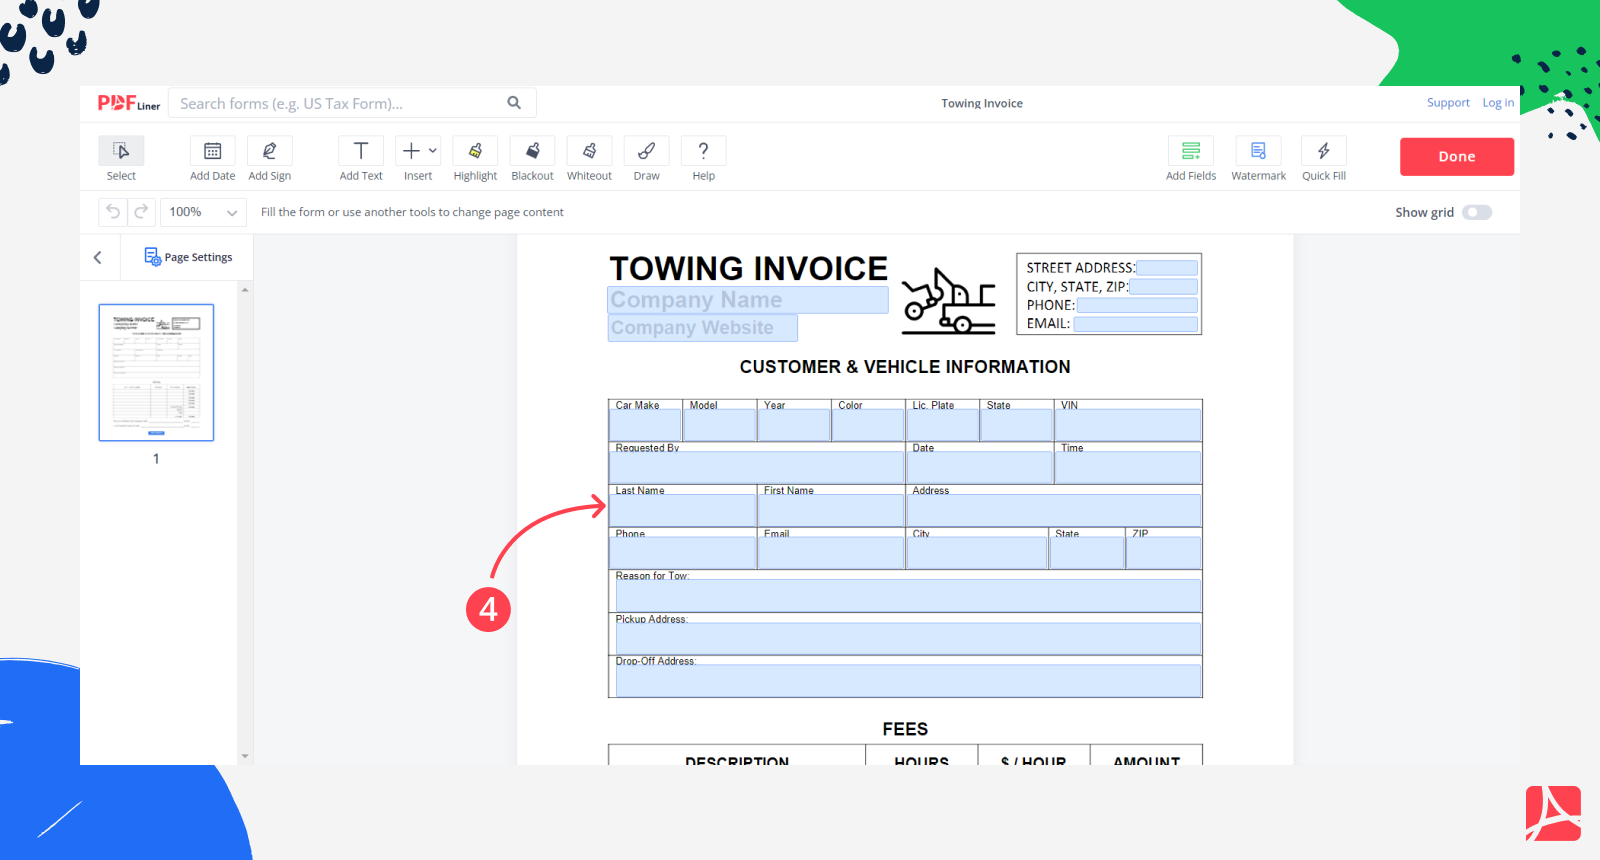 Towing Invoice screenshot step 4